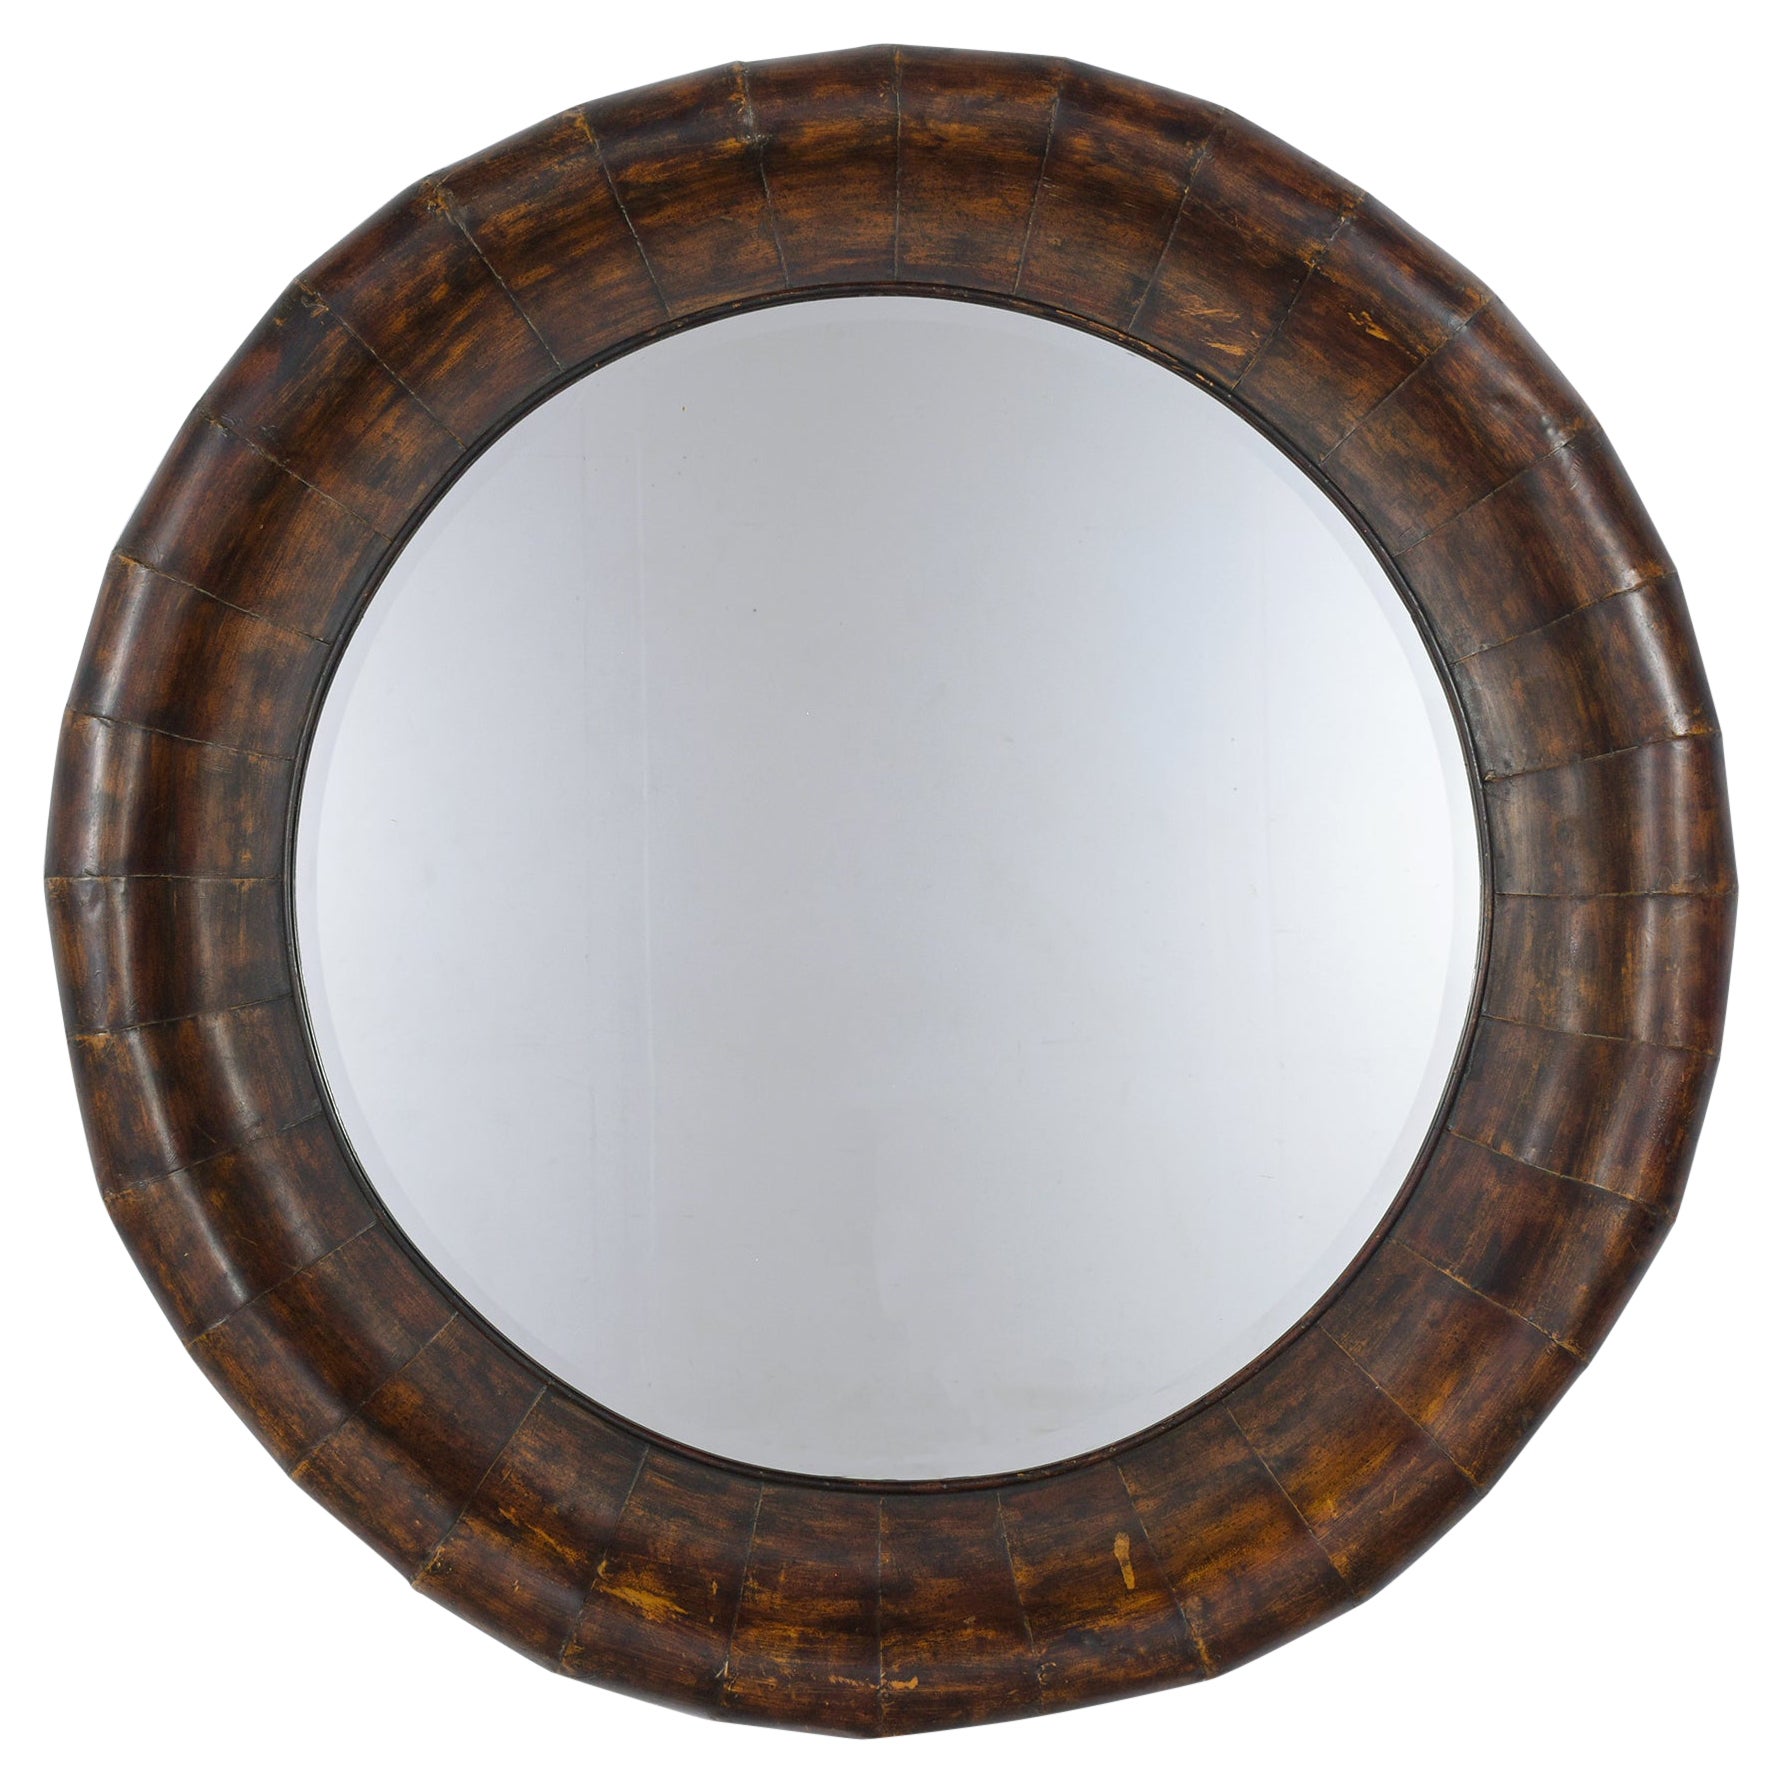 1970 Mid-Century Modern Circular Mirror with Parchment Frame - 40" Diameter